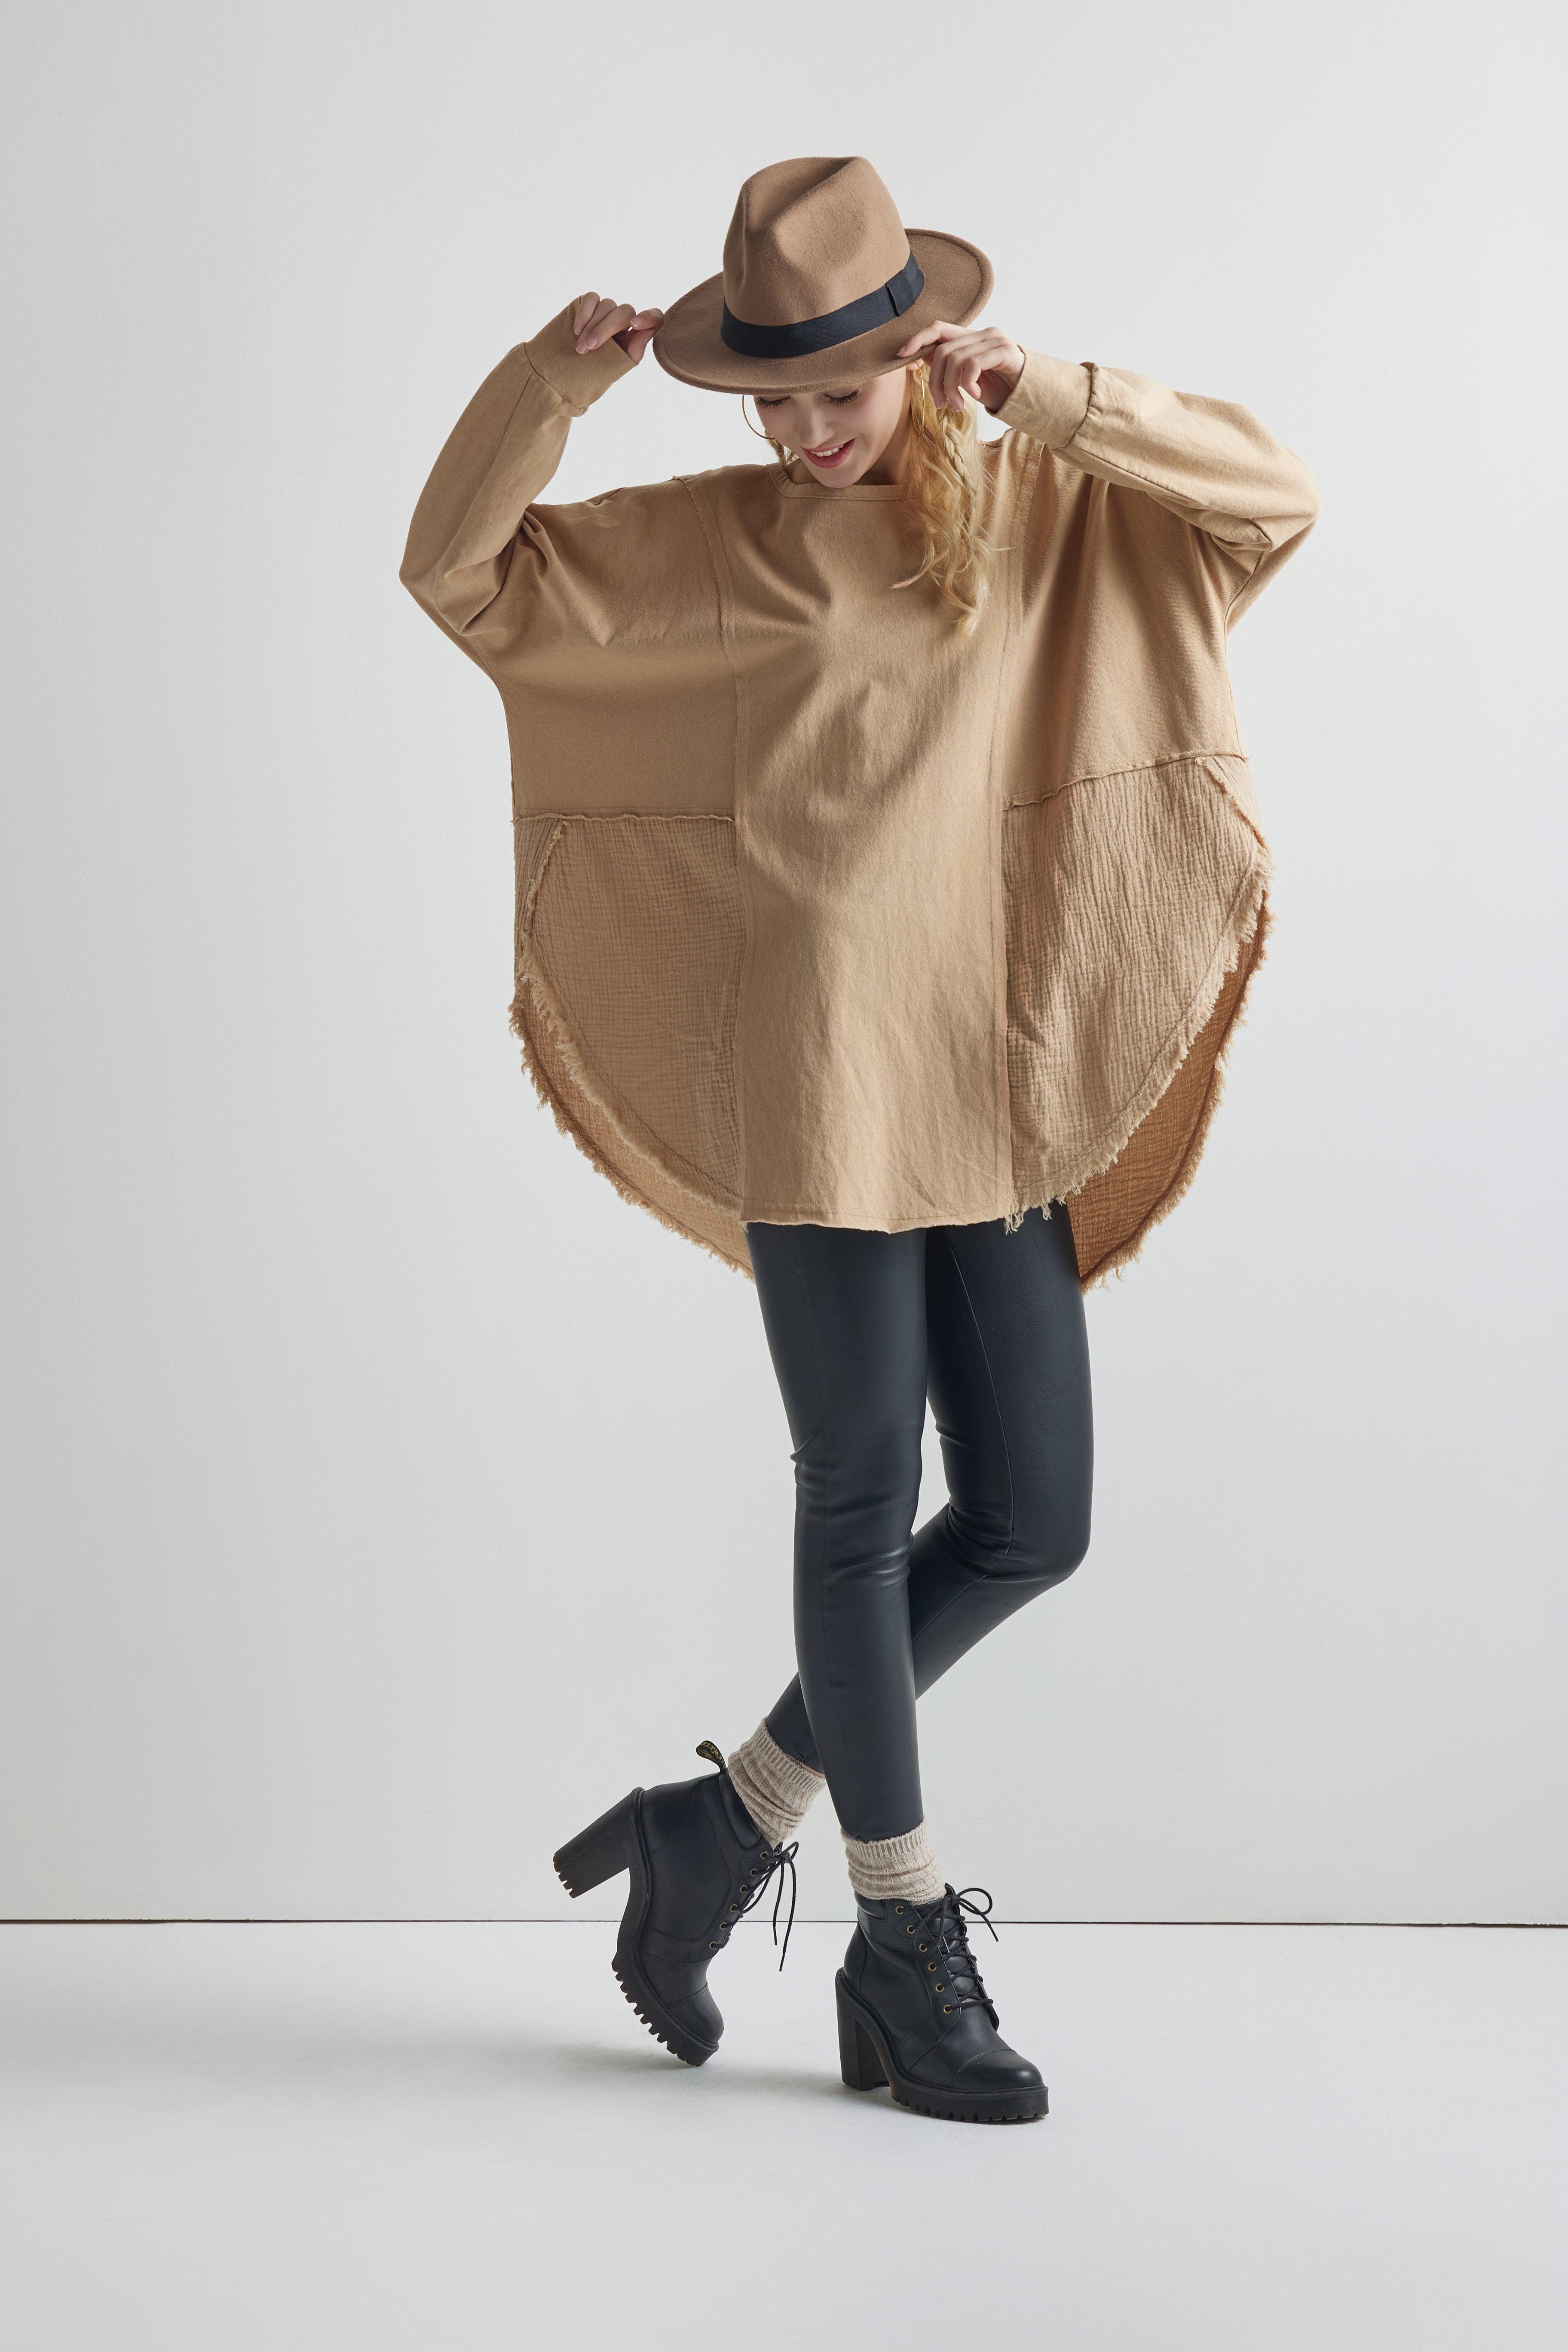 100% Cotton Comfy Oversized Round Side Slit Contrast Top - Taupe - noflik